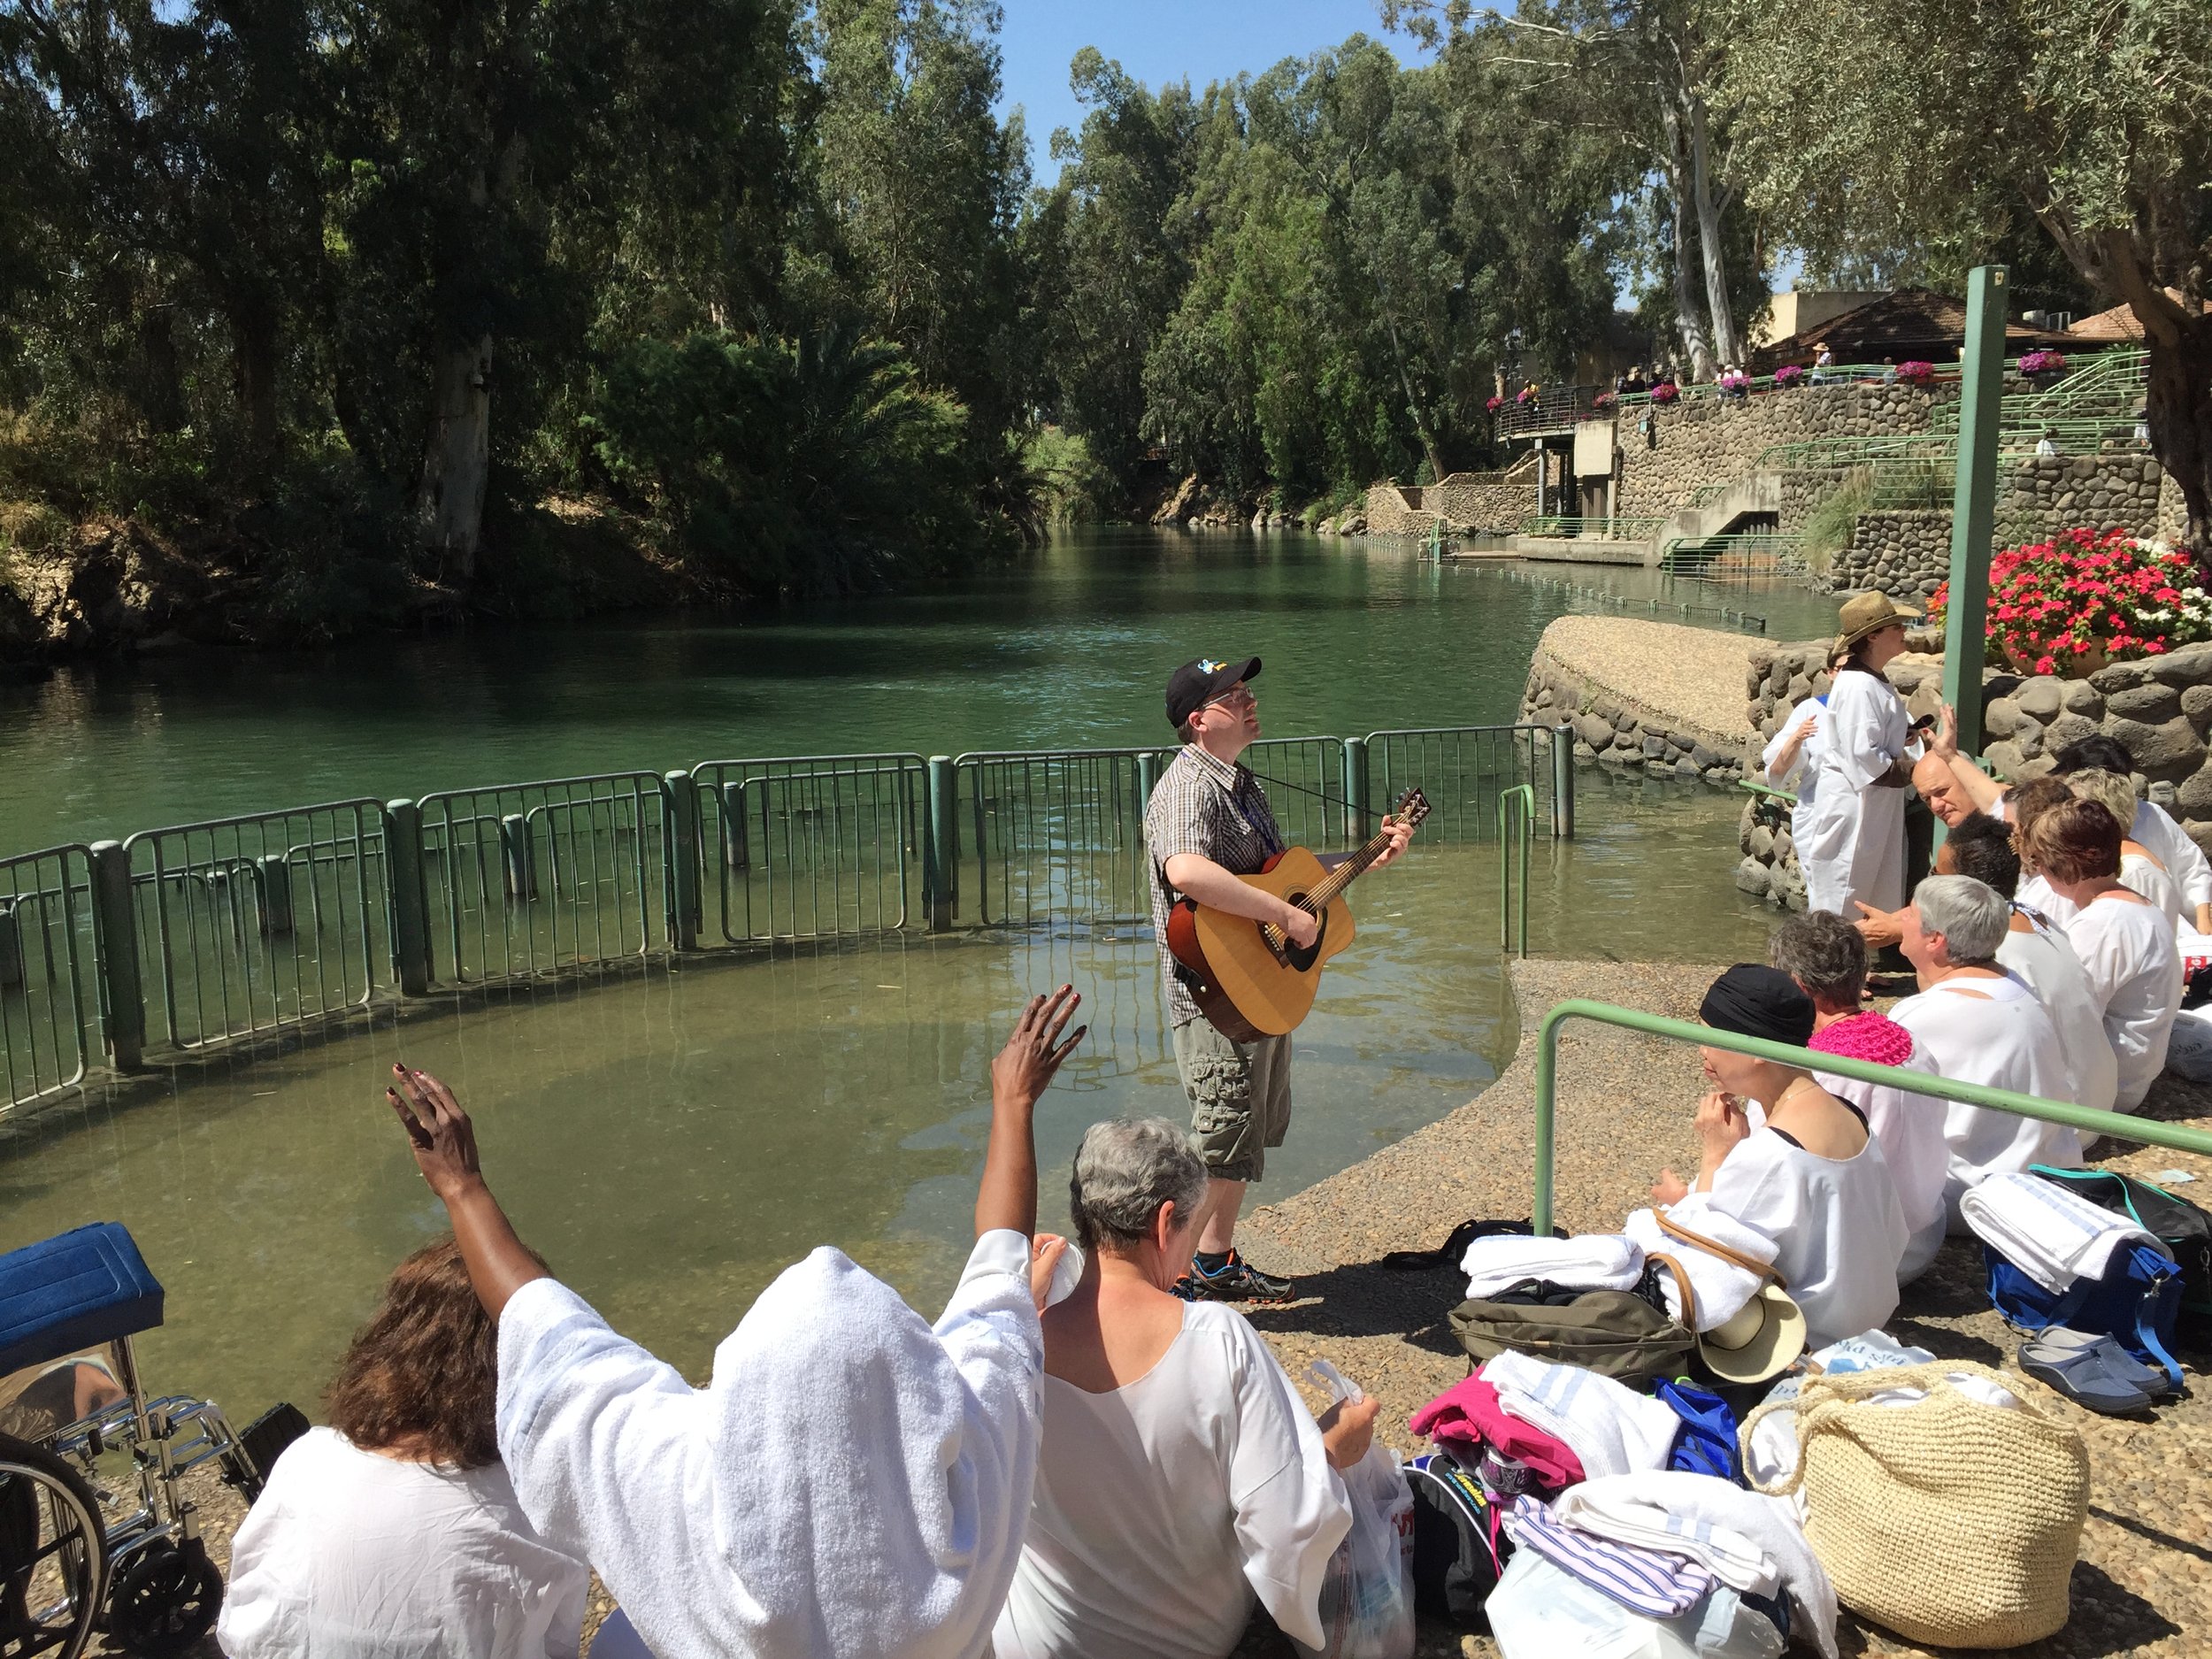 Leading worship at the Jordan River